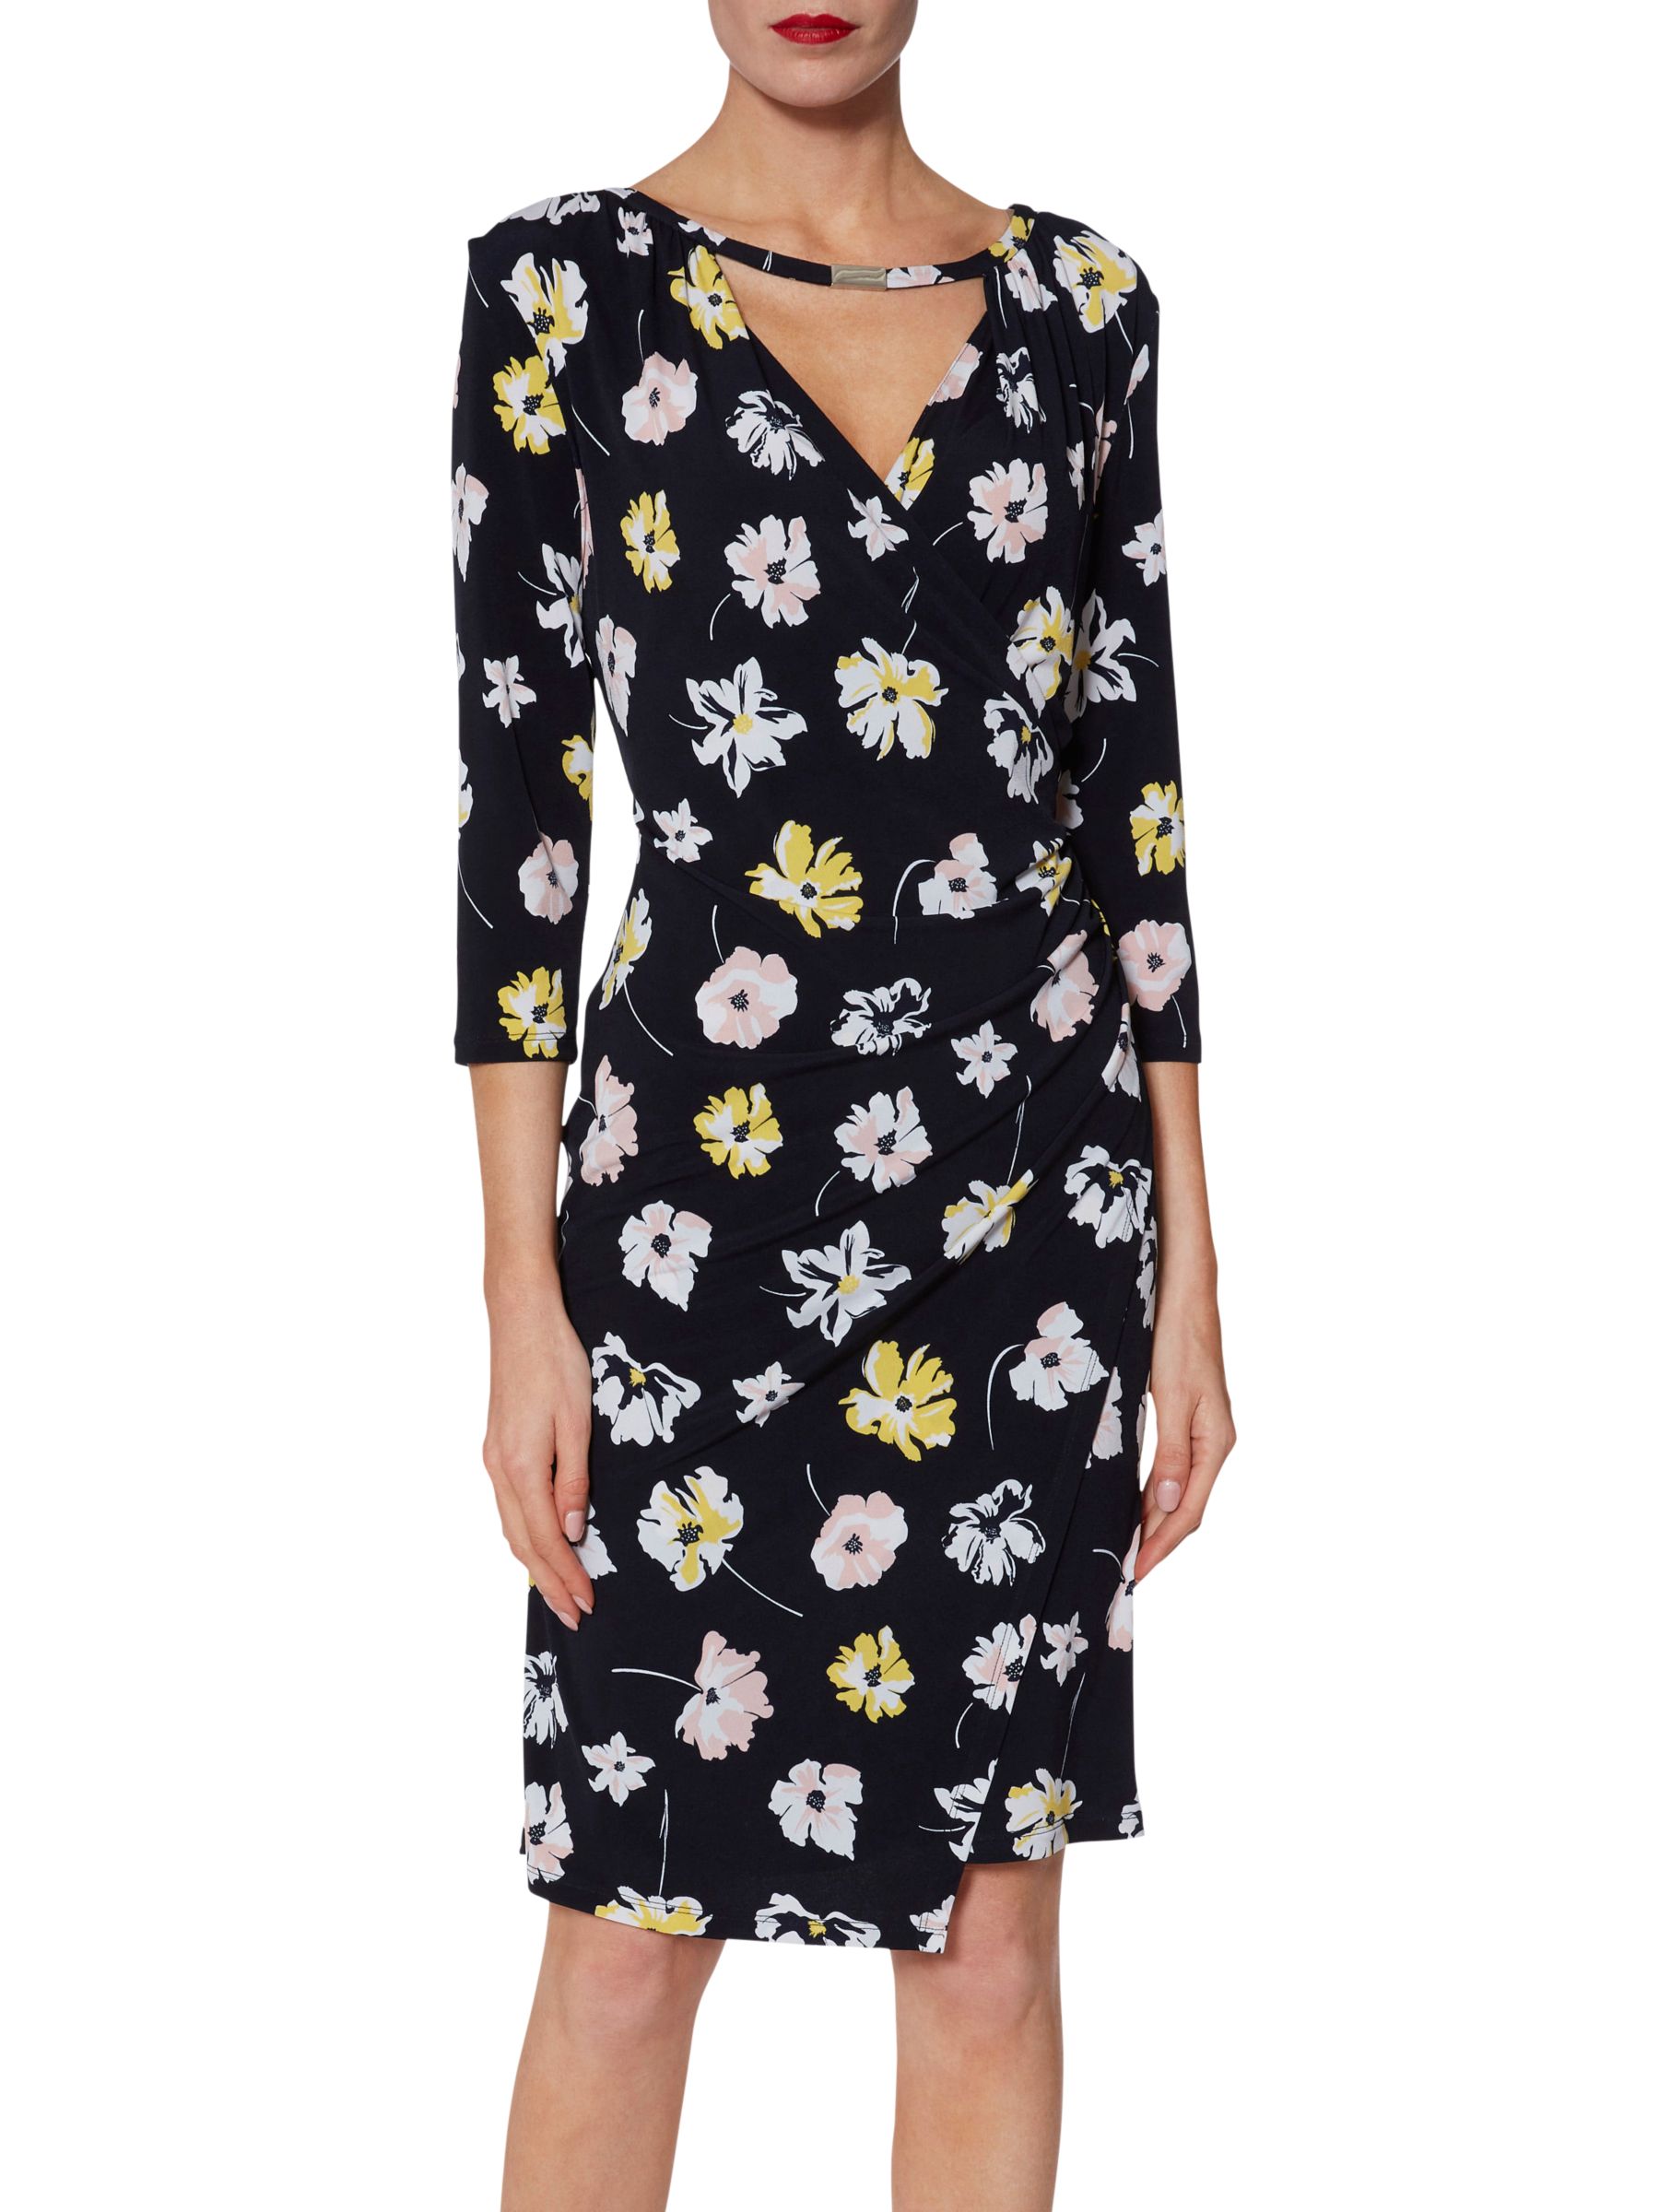 Gina Bacconi Keri Floral Jersey Dress, Navy/Multi